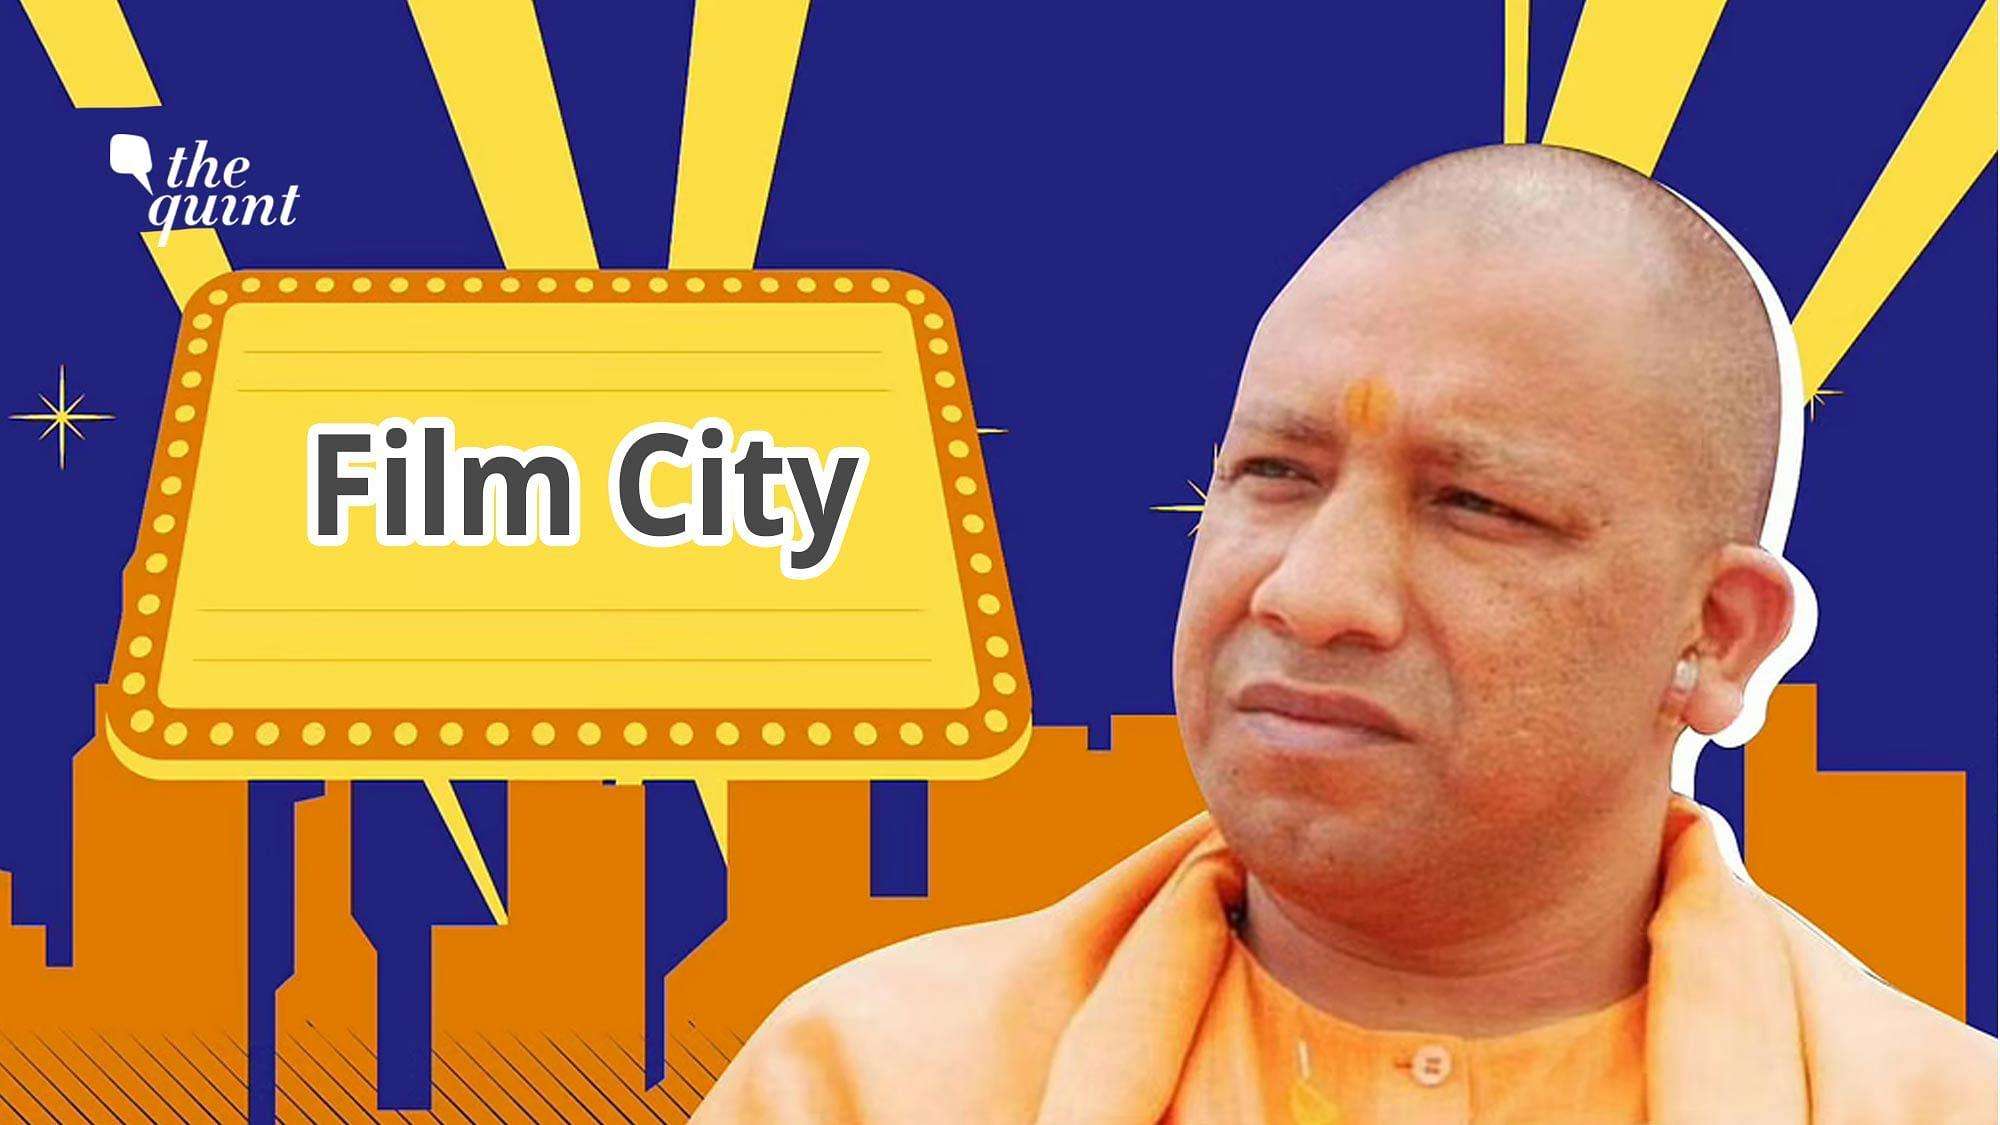 Film City will be made in UP, CM Yogi announced from Mumbai